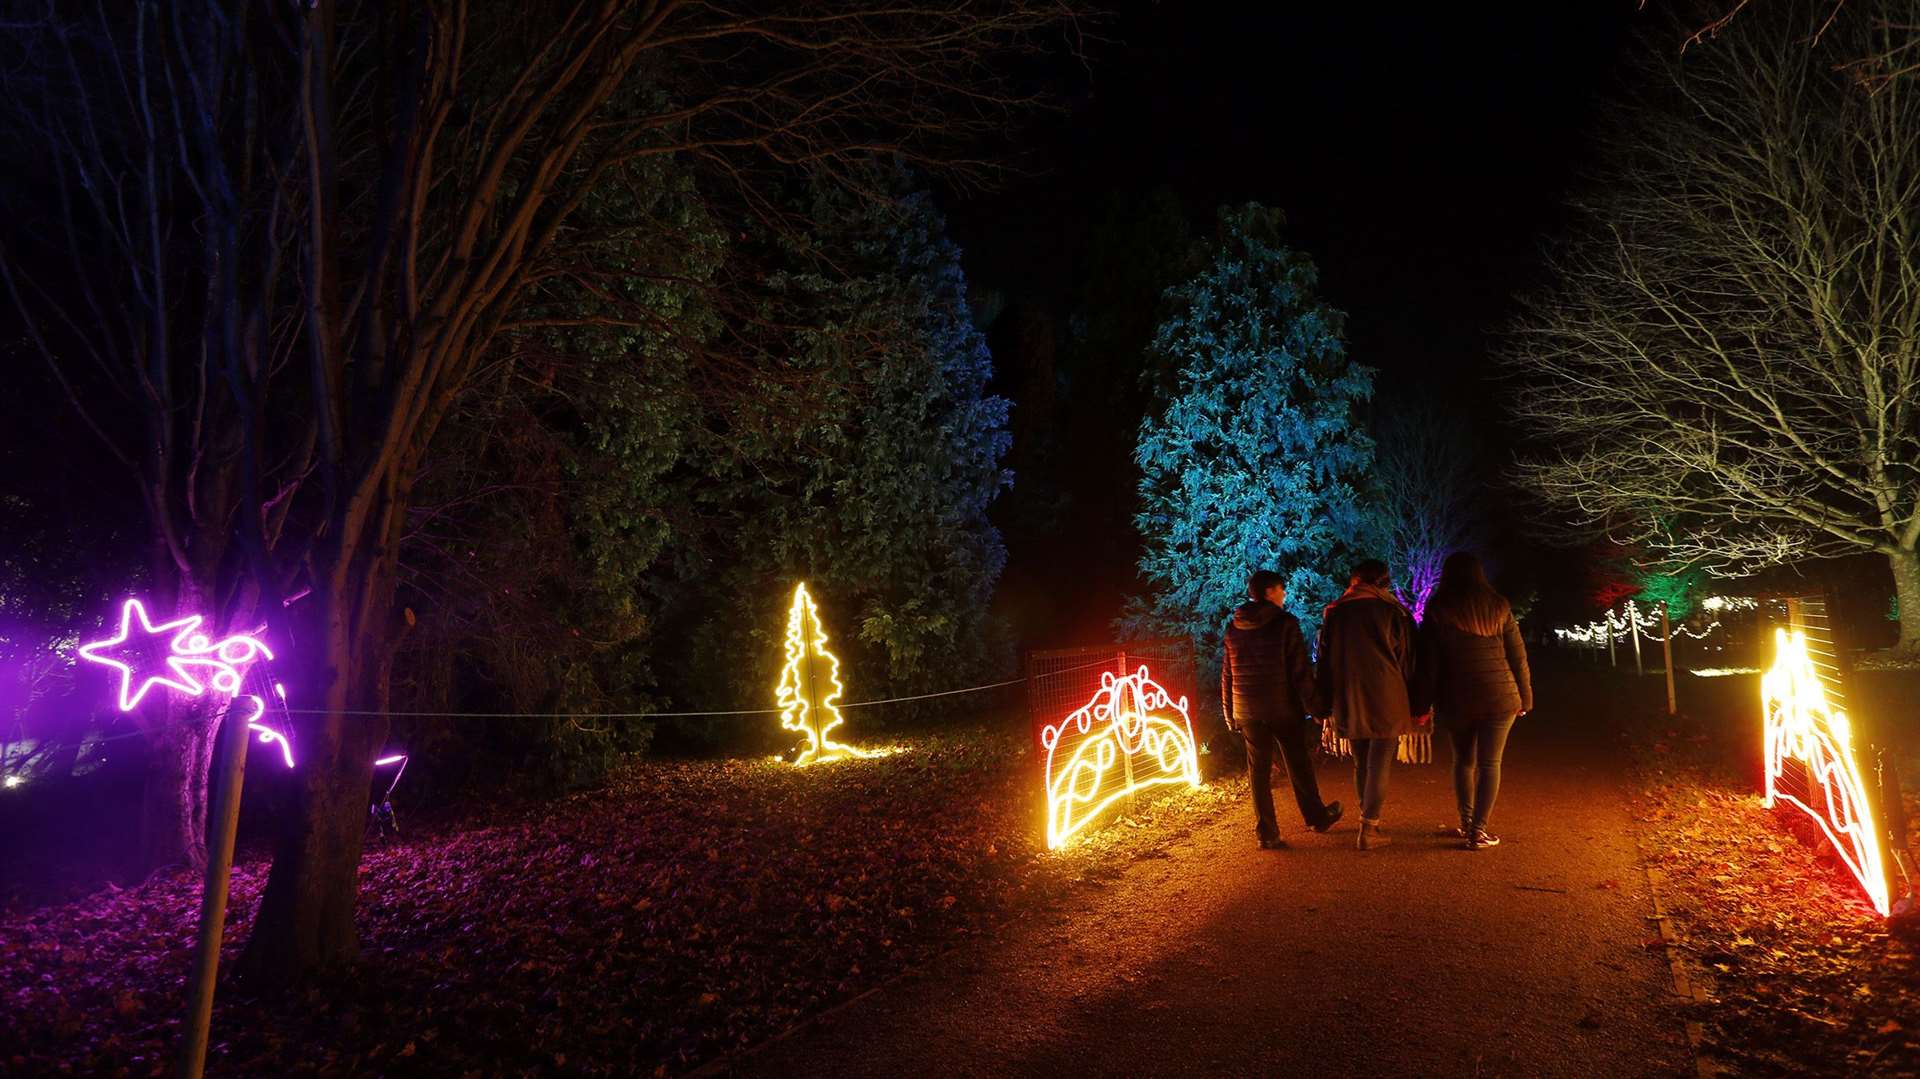 The illuminated trail Picture: Nick Johnson